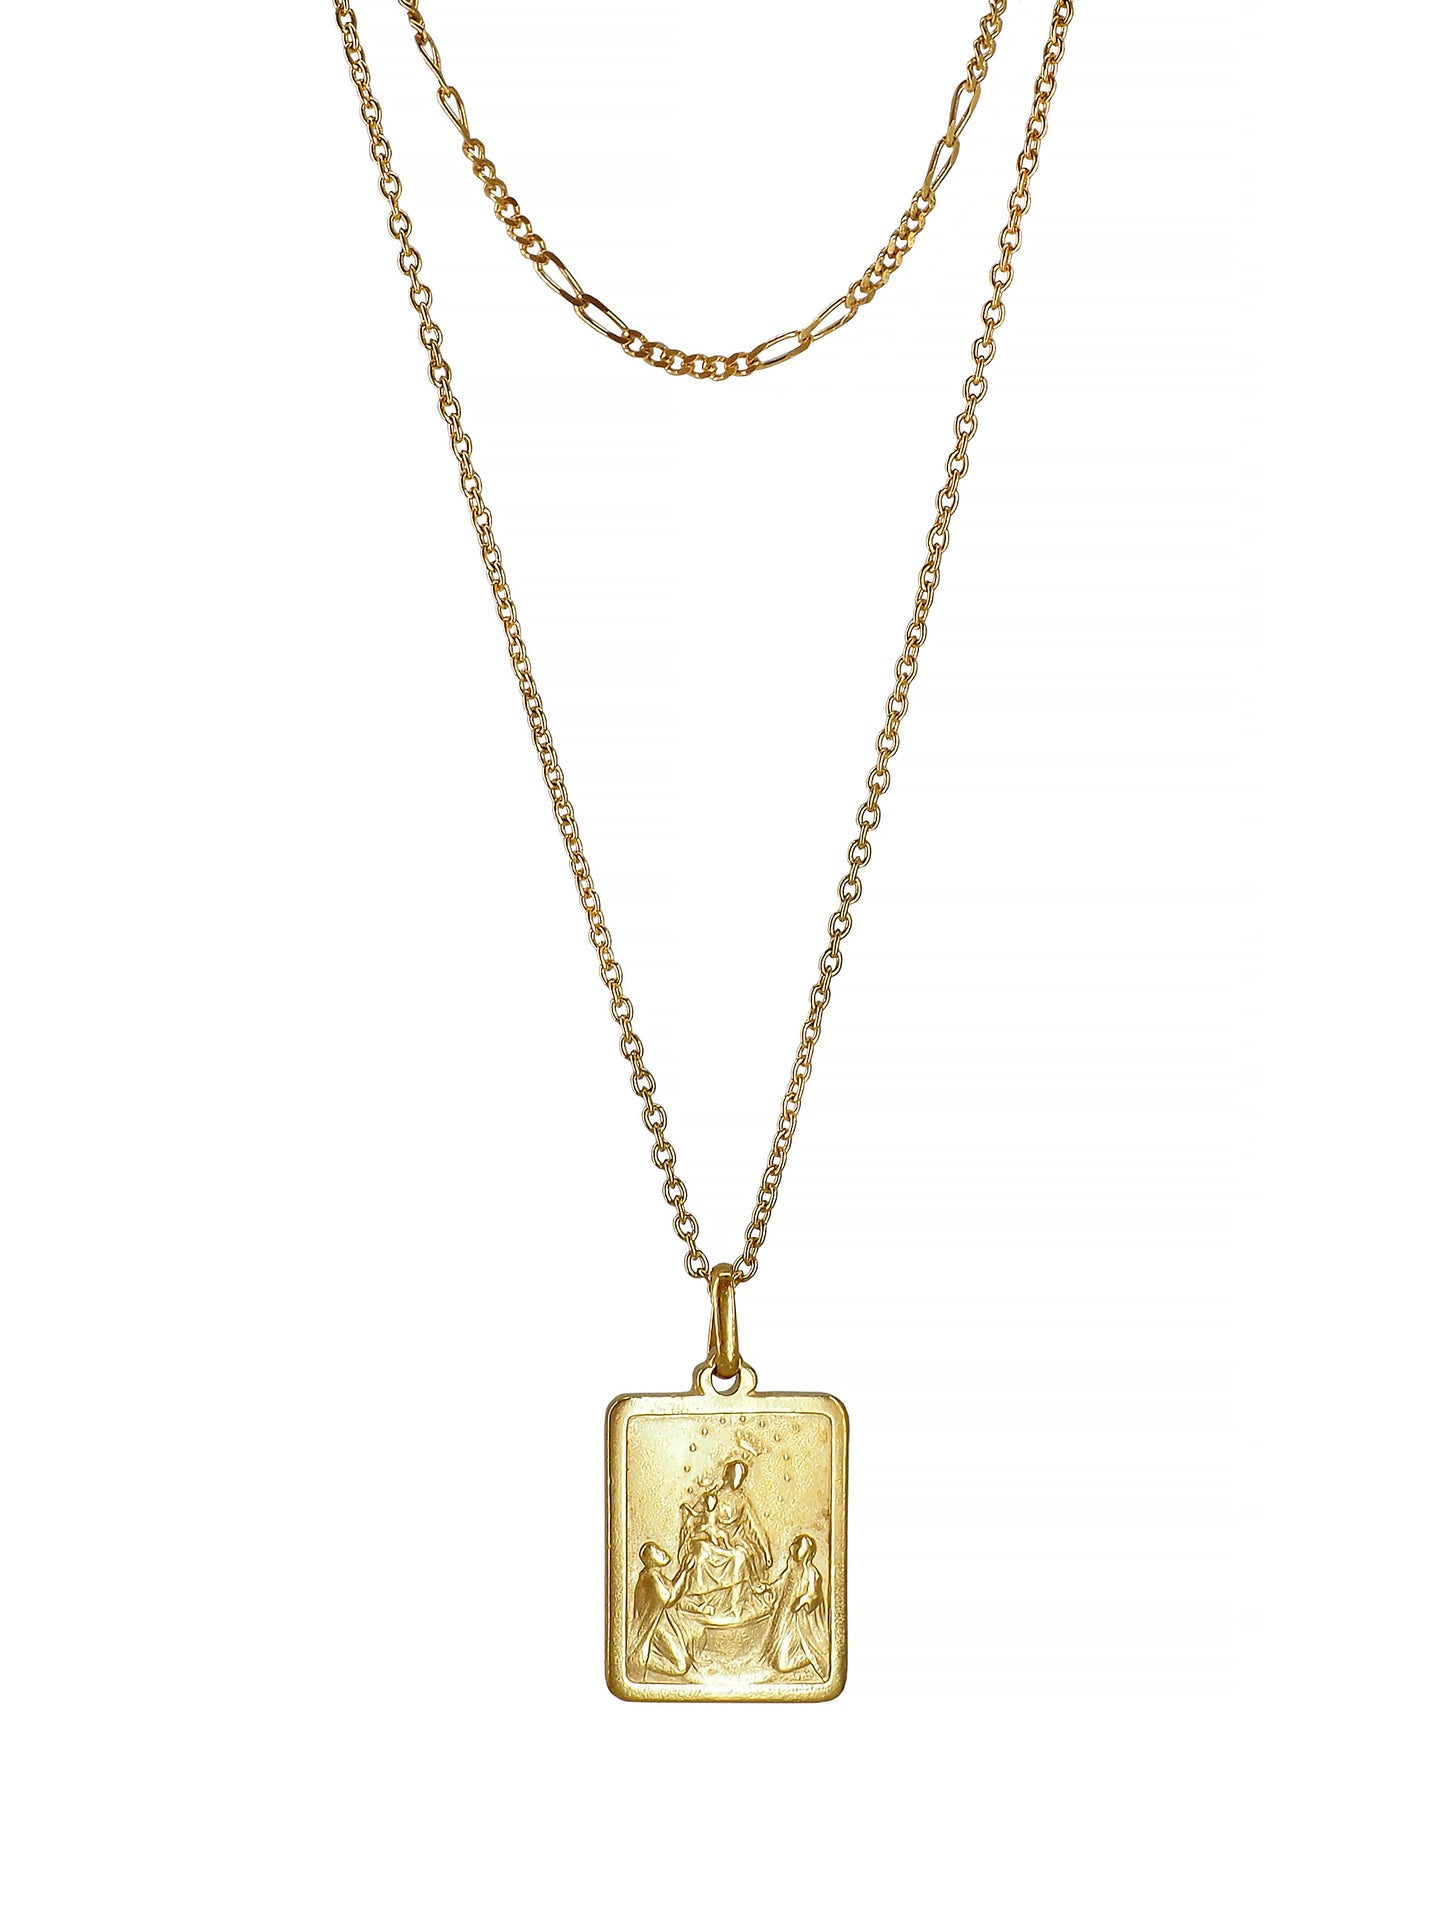 Virgen del Carmen Necklace, gold plated brass